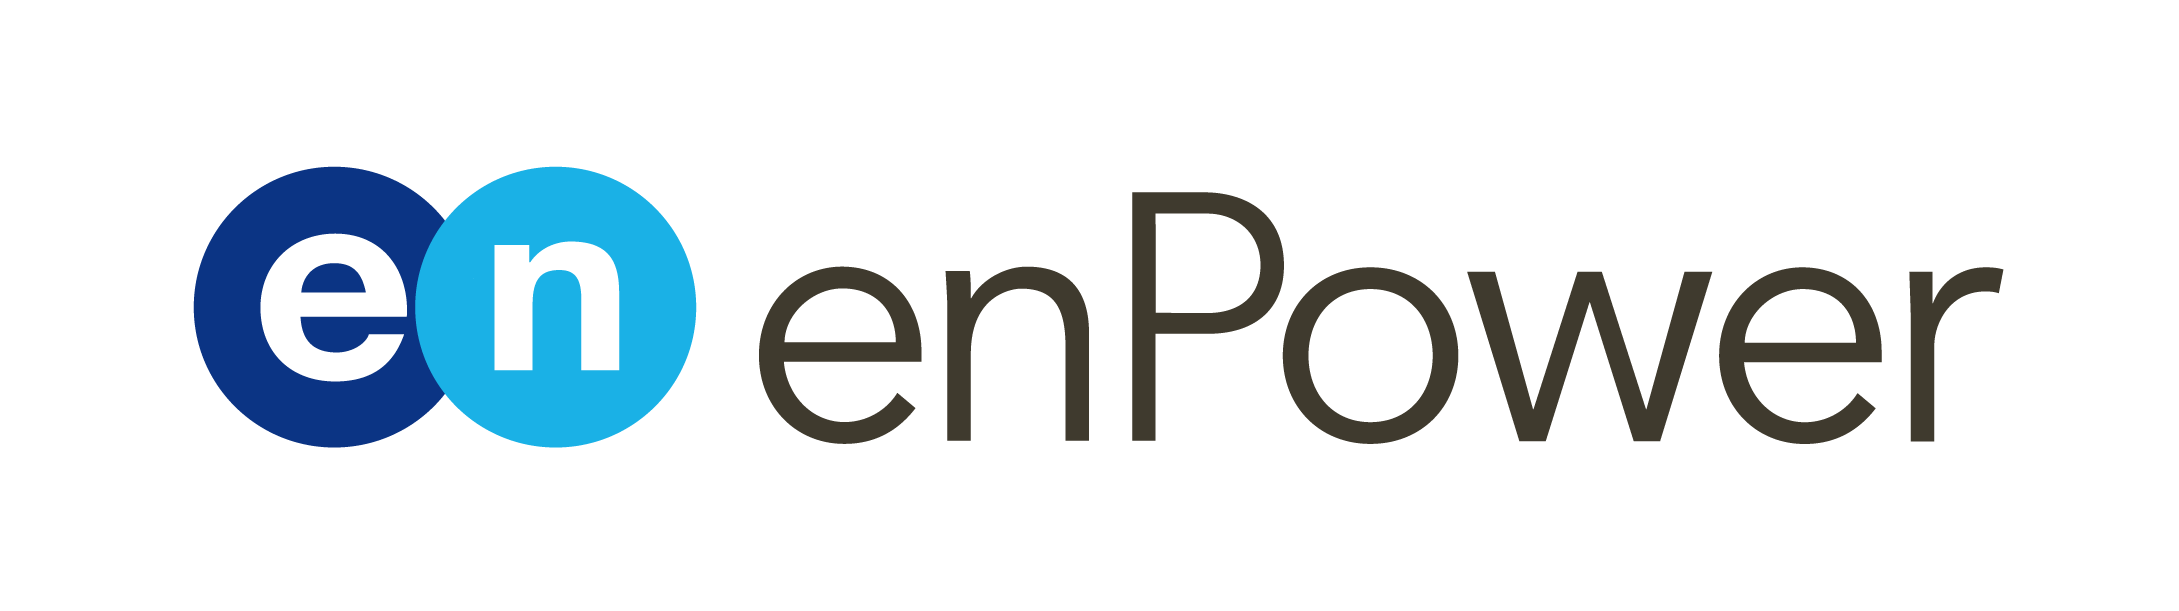 enPower logo.png